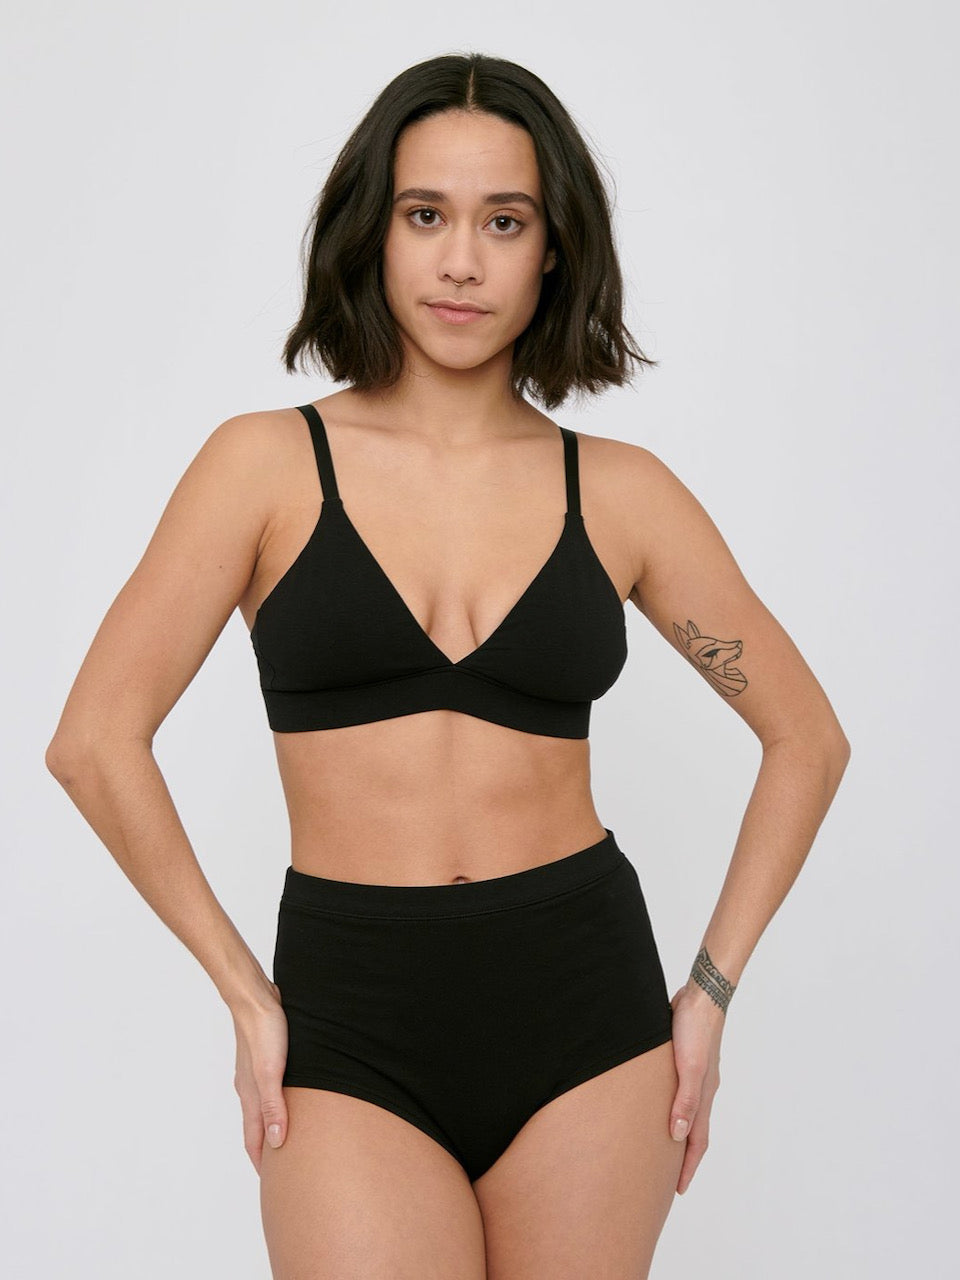 A woman wearing Organic Basics' Super High-Rise Briefs ⋅ organic cotton – (2-pack) – Black bikini top.